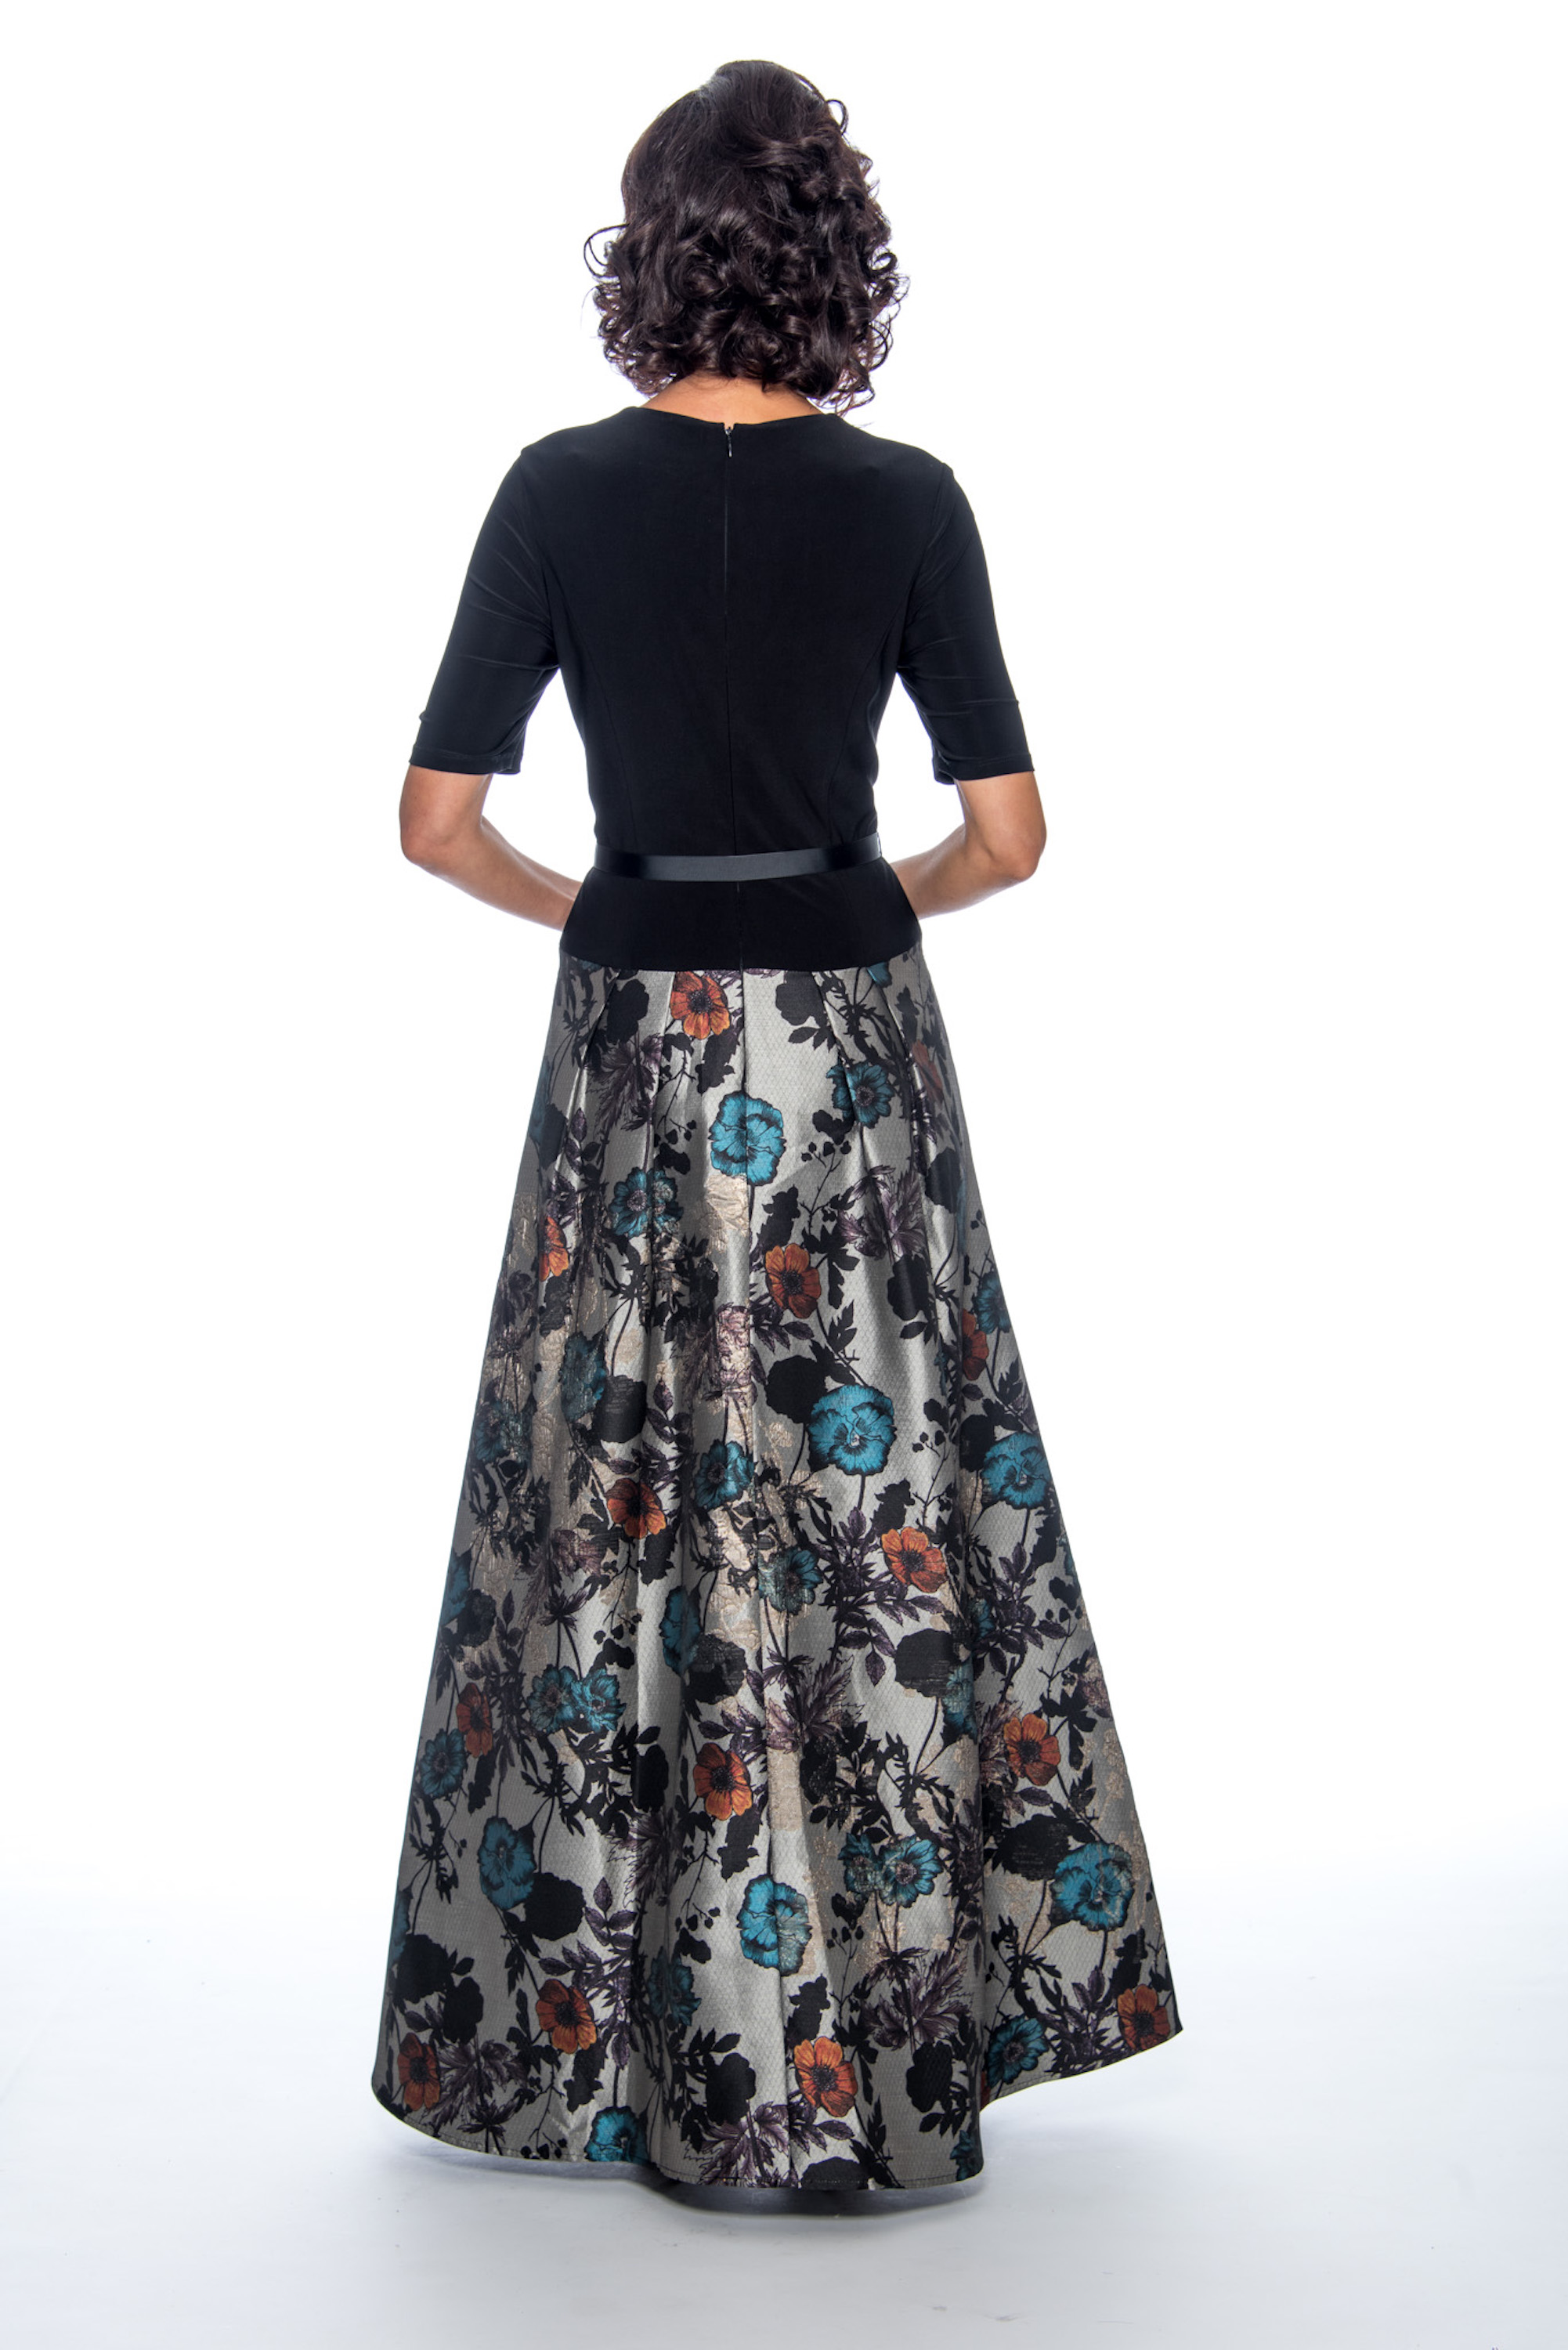 Printed skirt, long dress